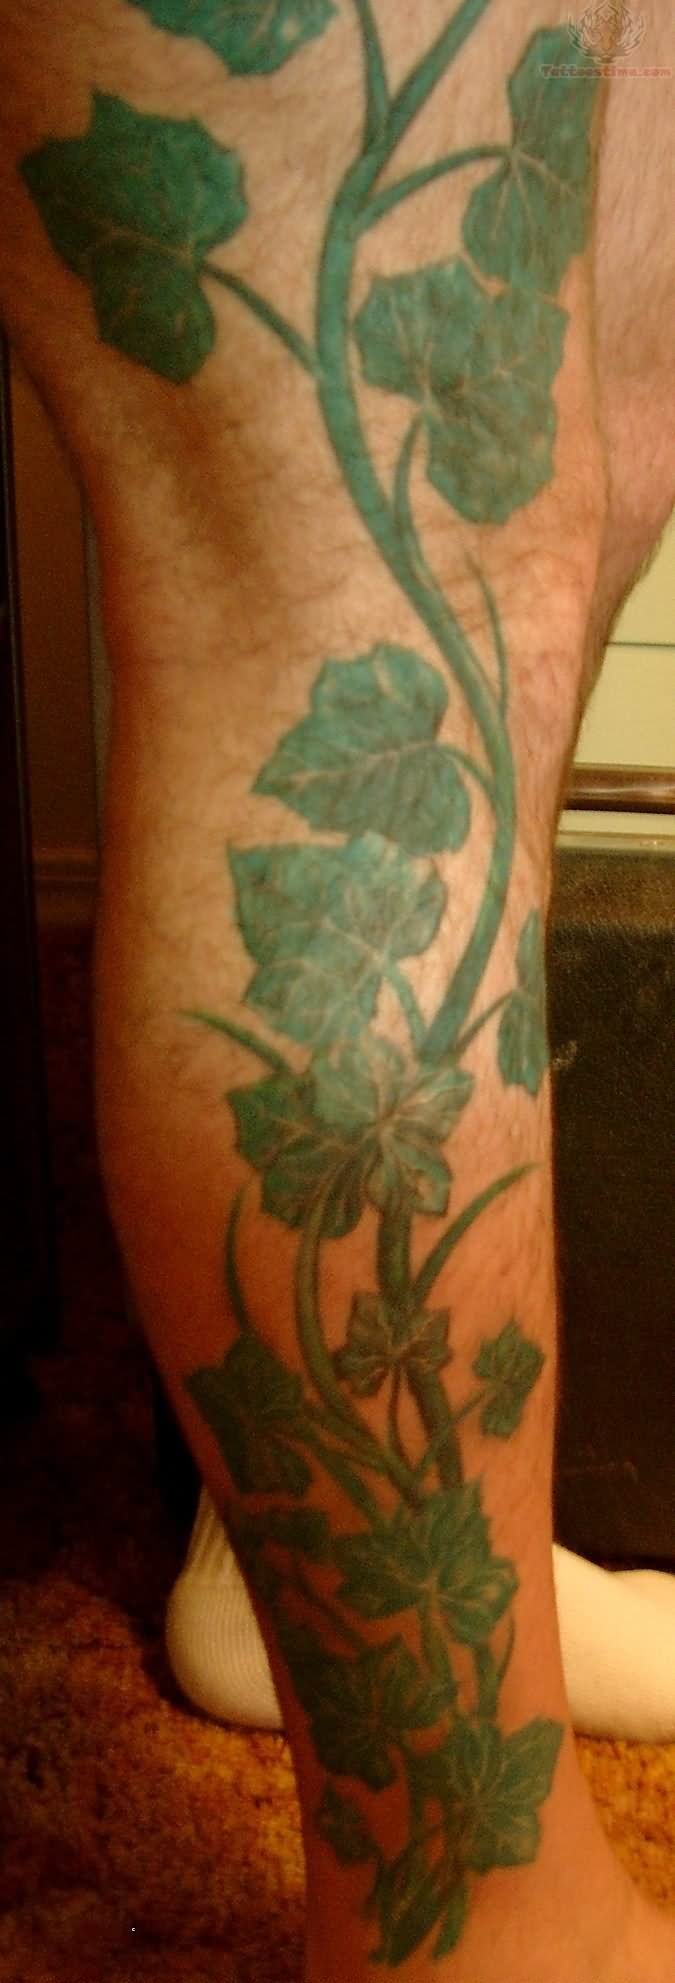 Green Ivy Vine Tattoo On Right Leg